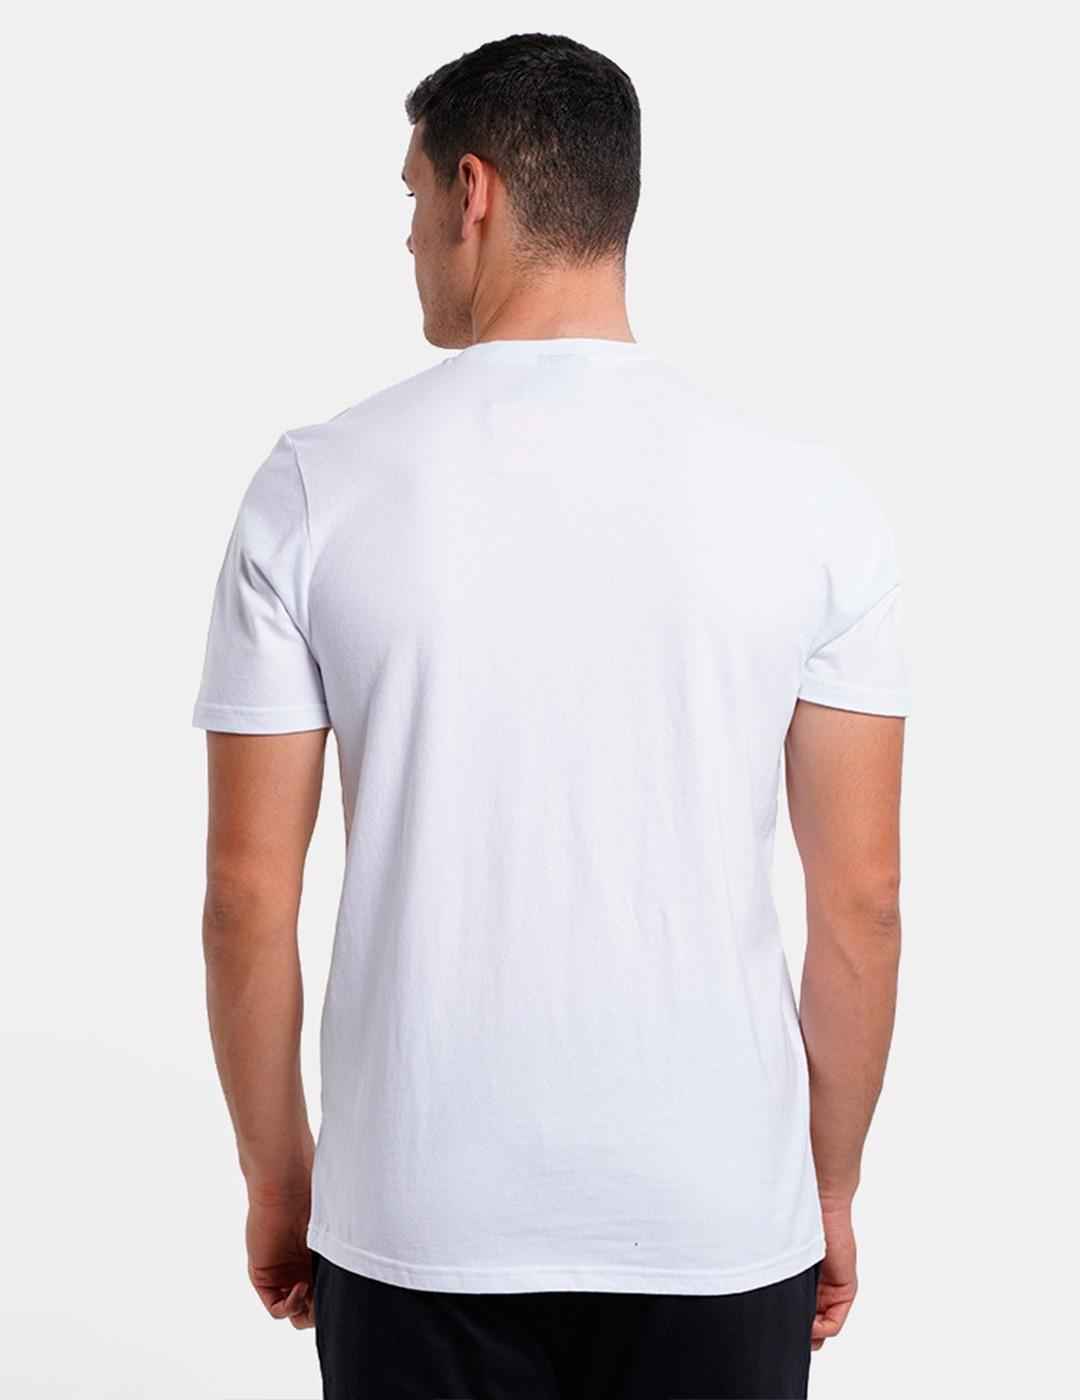 Camiseta Ellesse 'Siebaro' Blanco